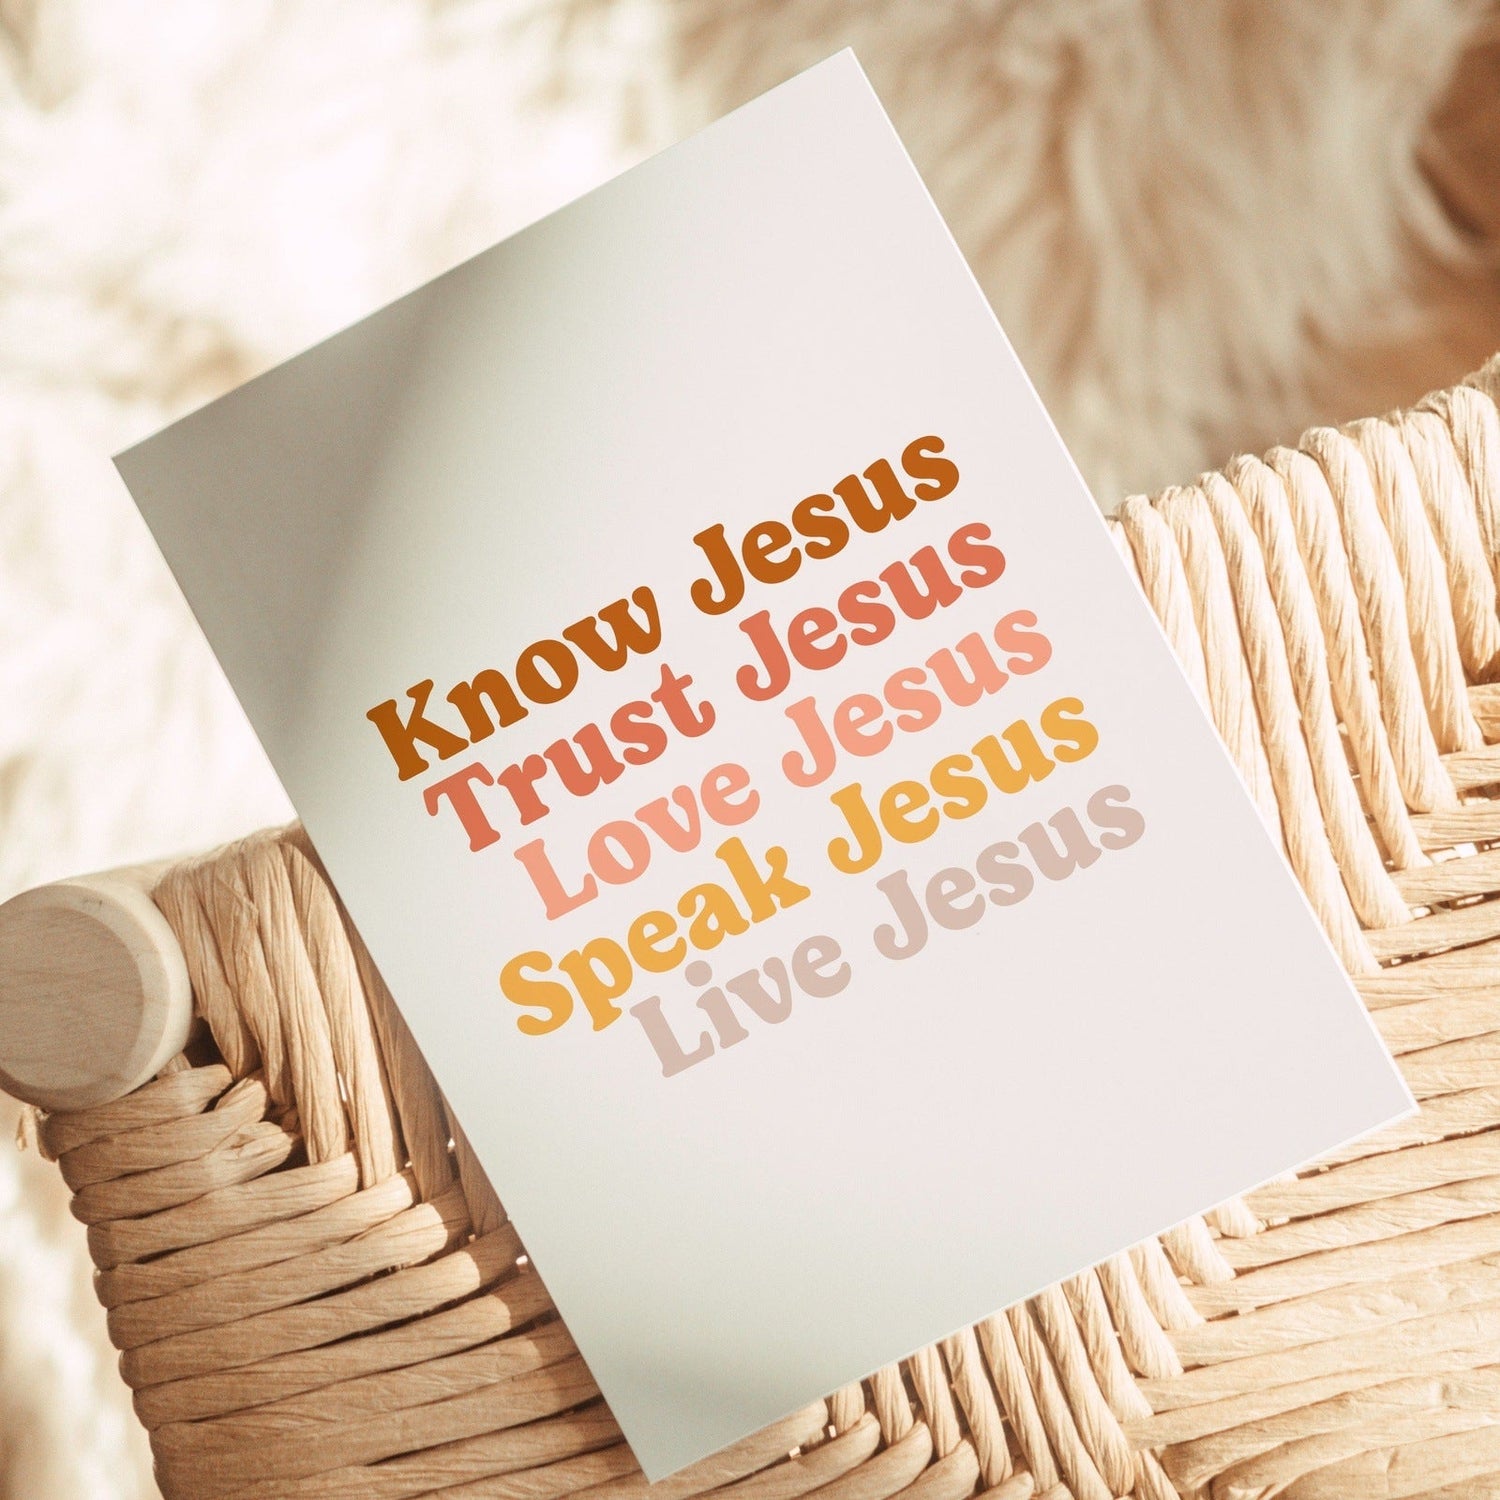 Know Jesus Live Jesus Printable - Little Way Design Co.